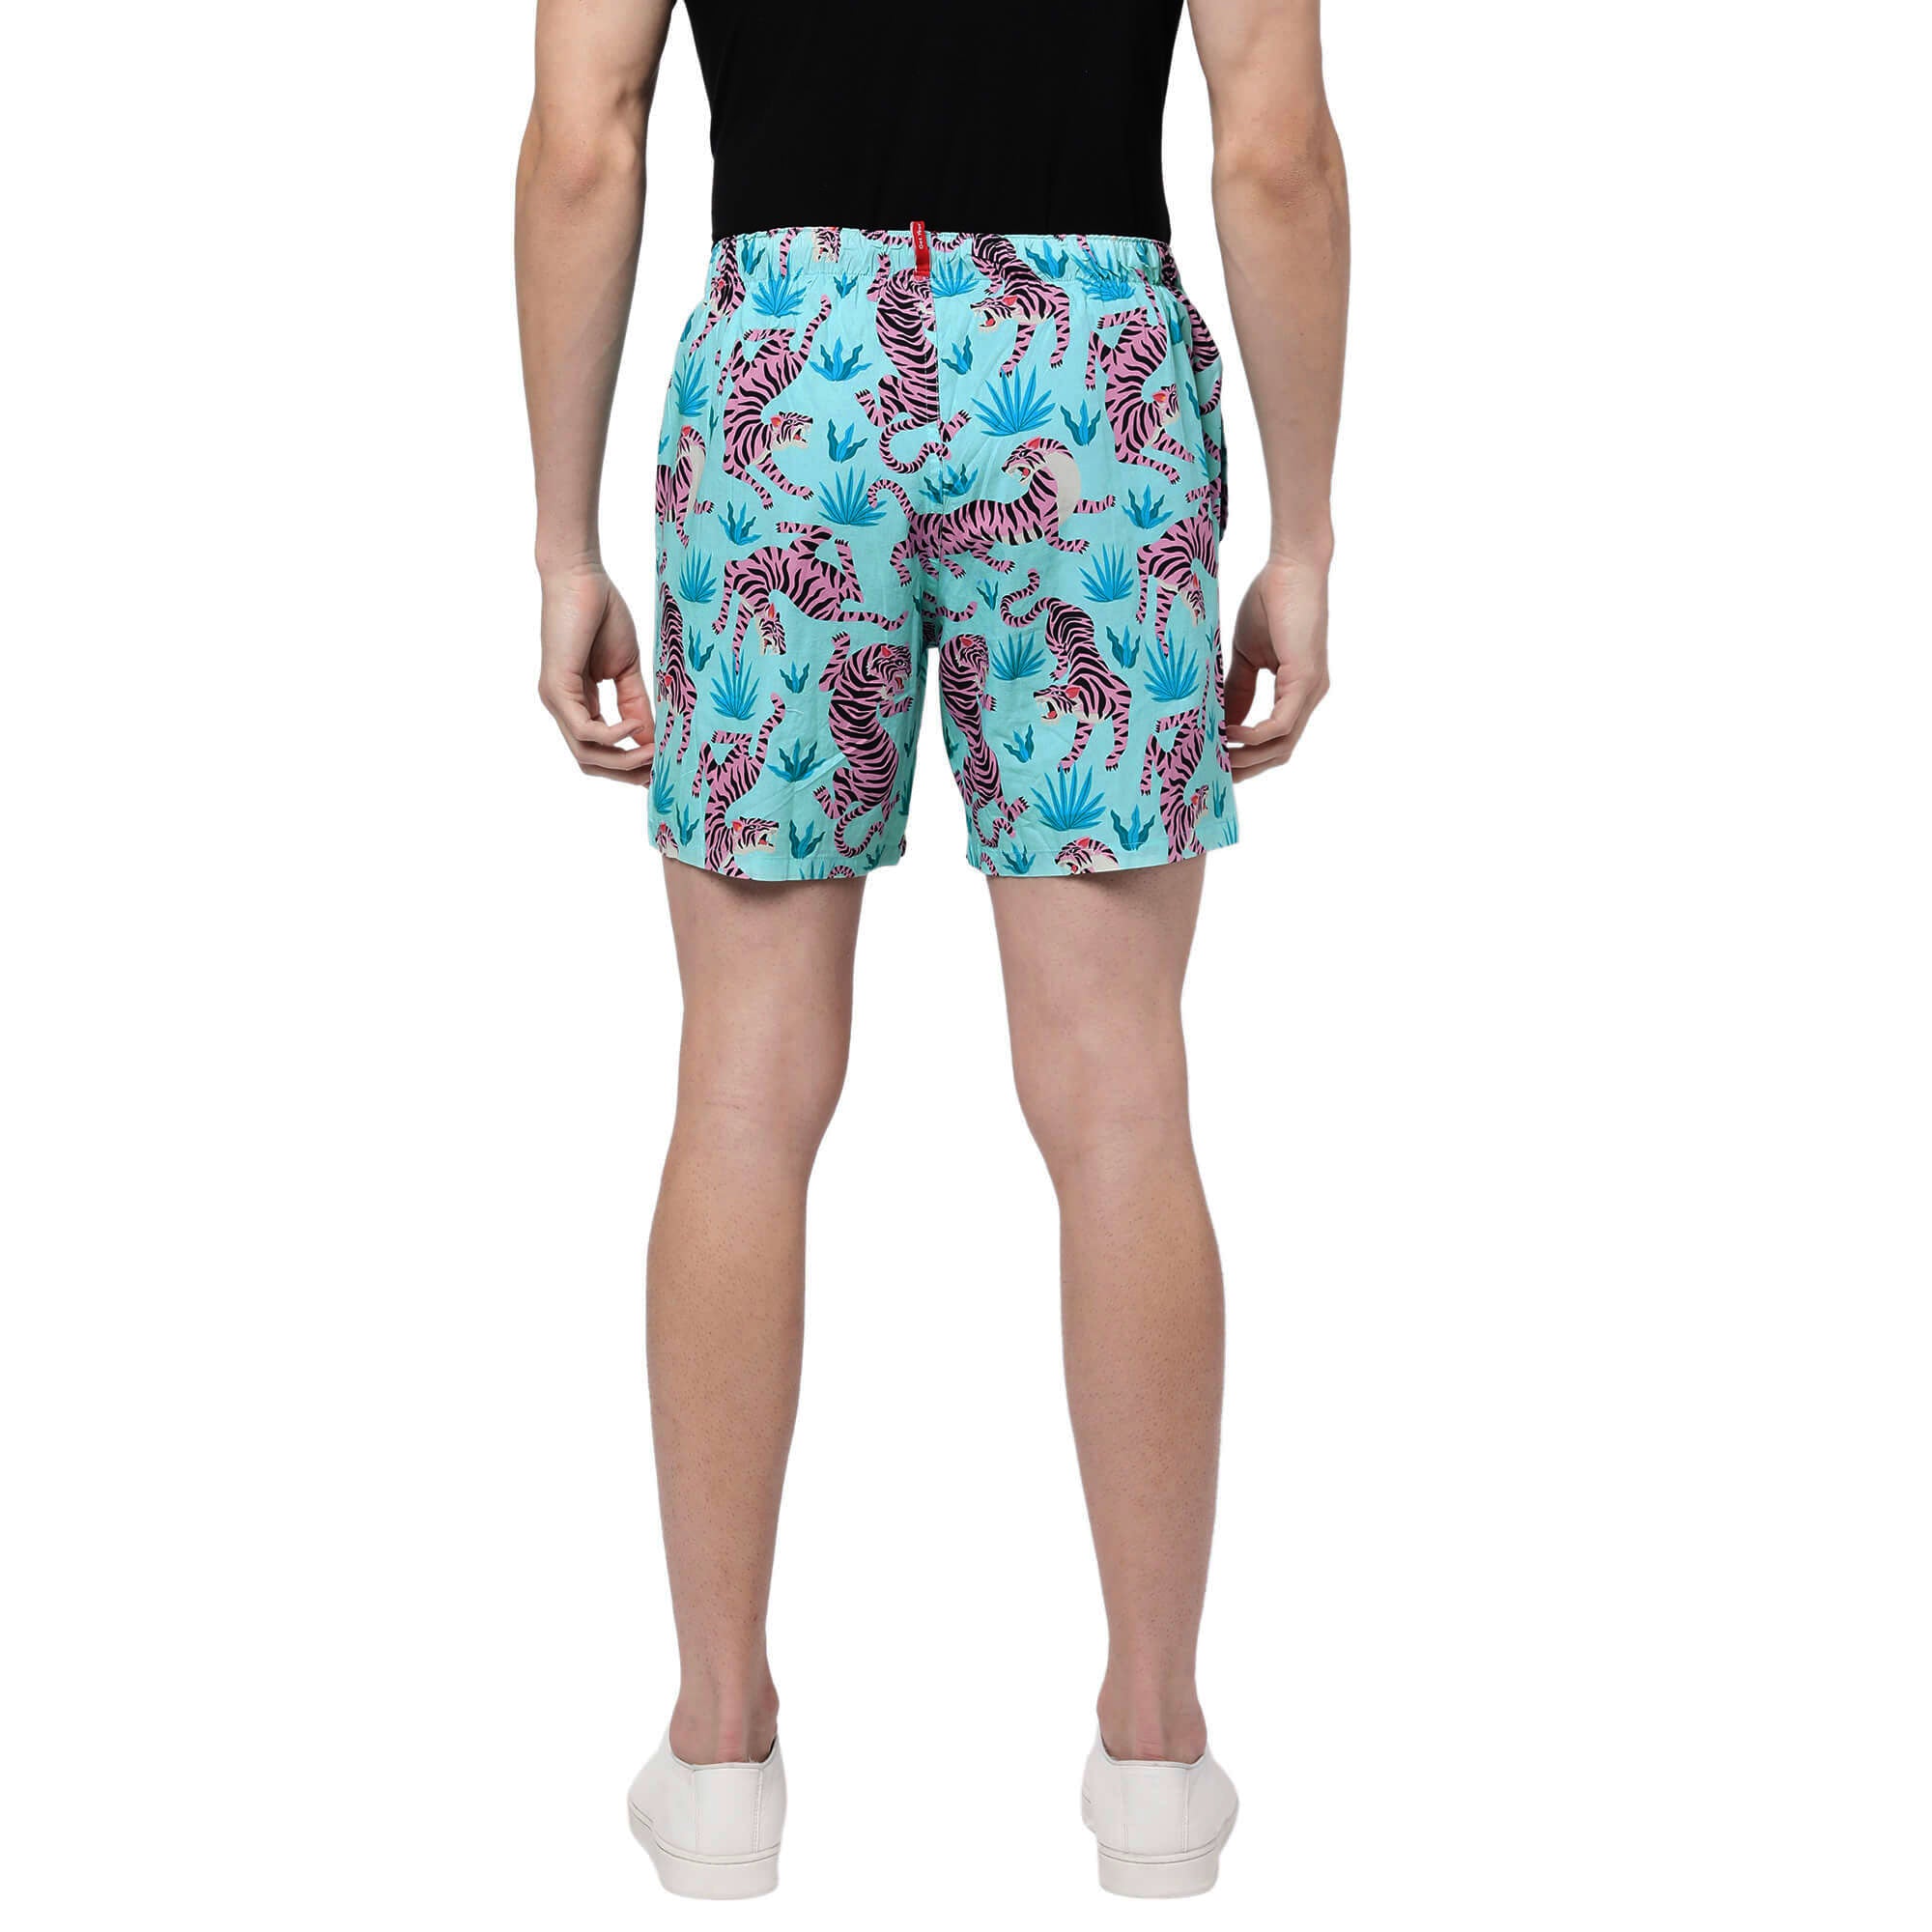 Stylish Shorts for Men